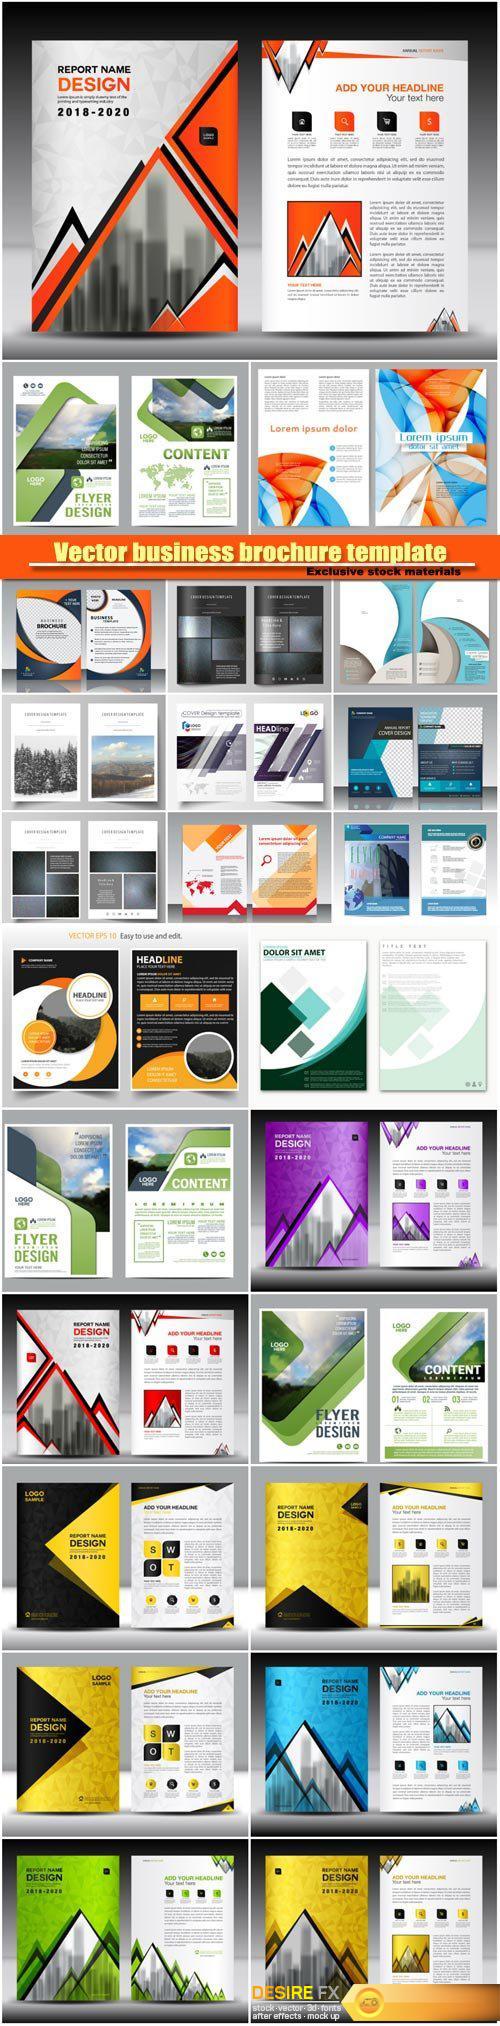 Vector business brochure template #11